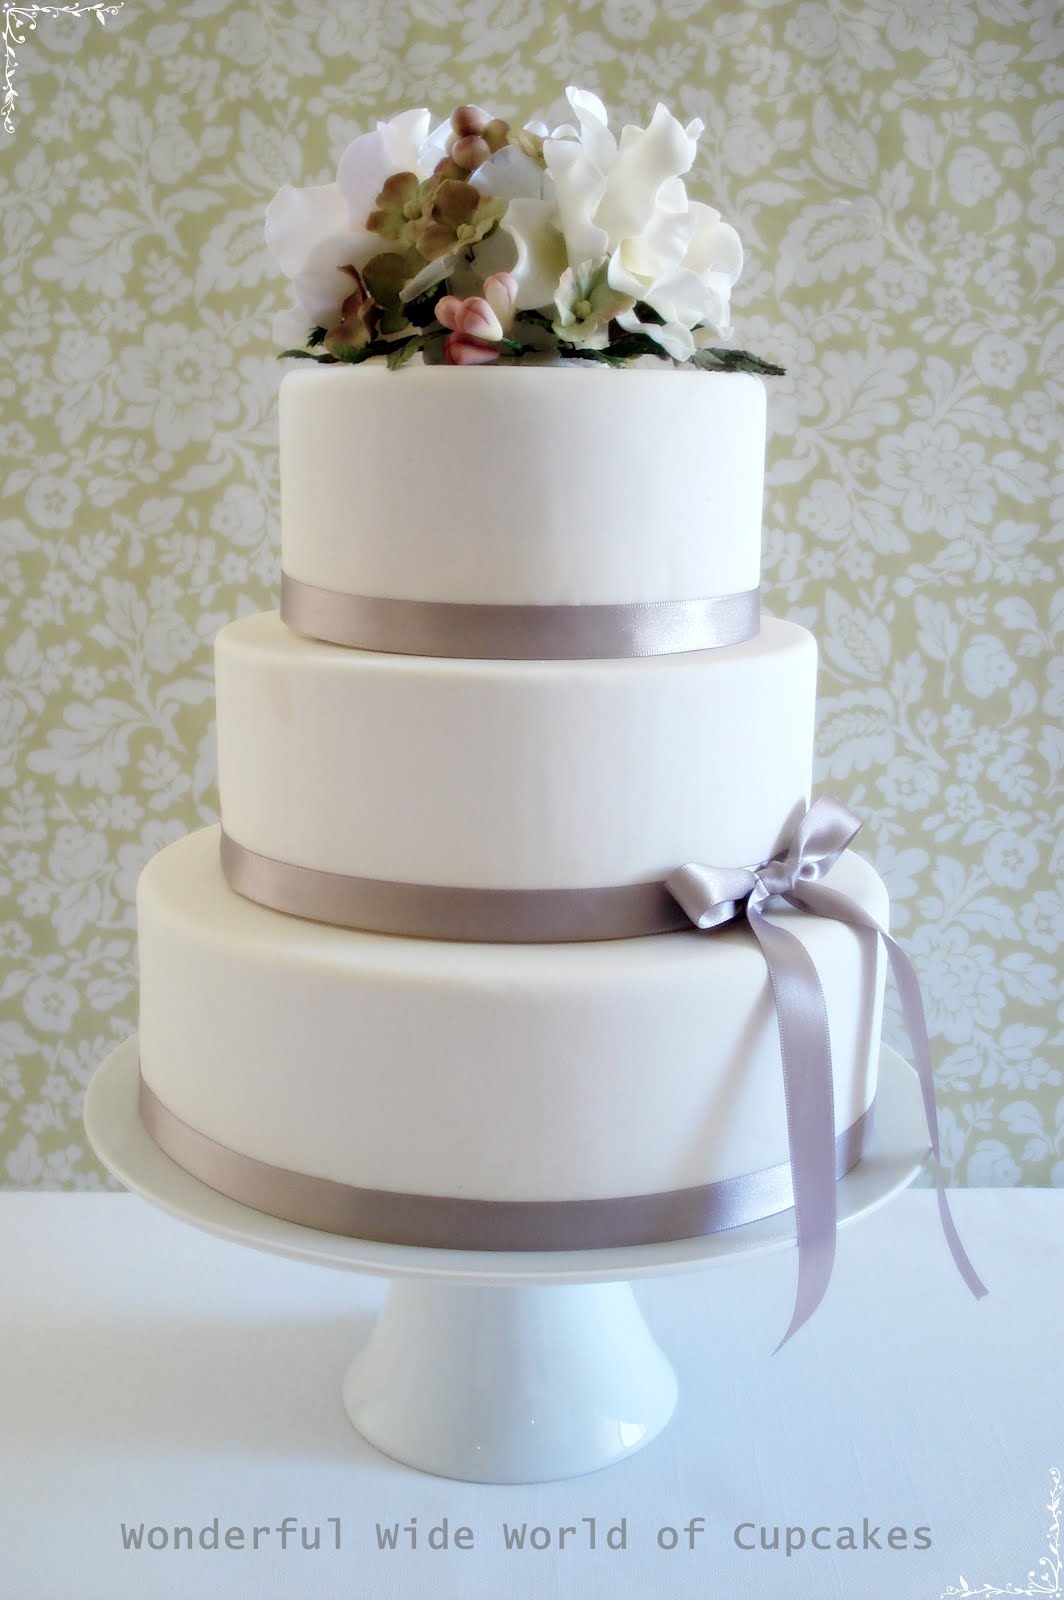 Wonderful World of Cupcakes: Wedding Cake with Flowers